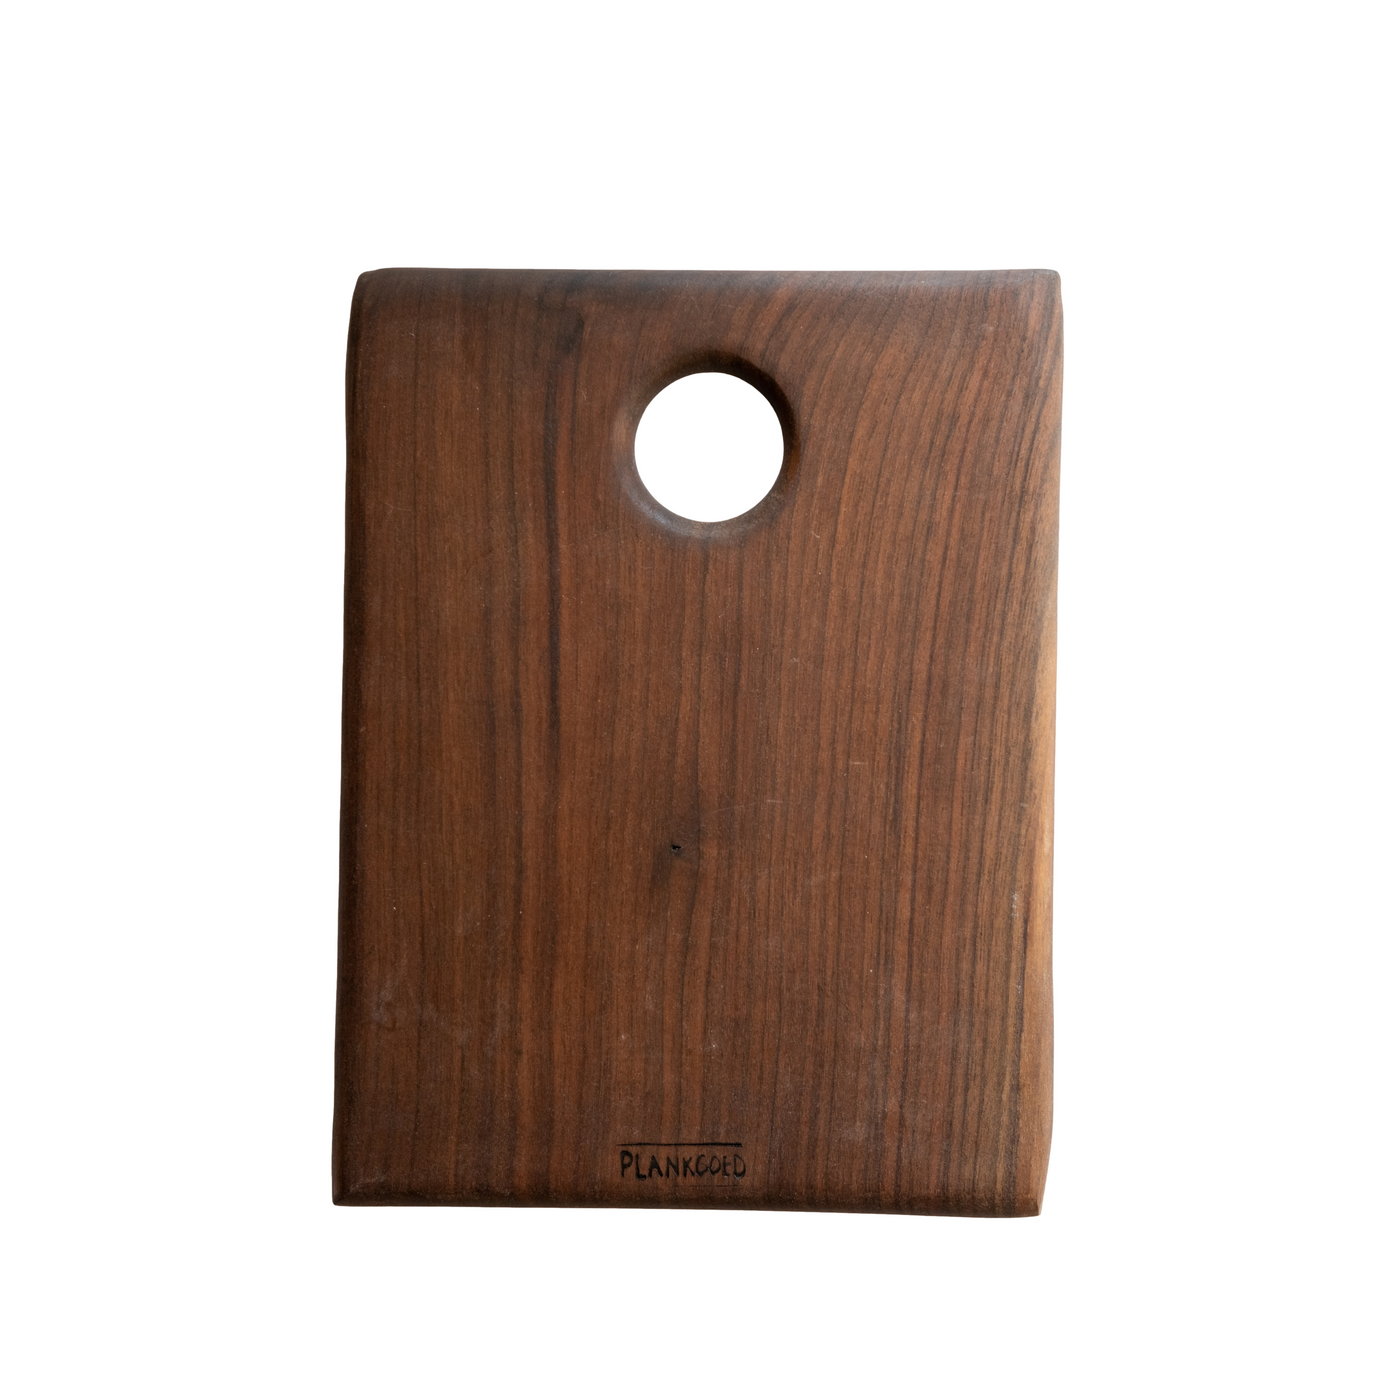 Plankgoed: Cutting  Board - Medium - Walnut